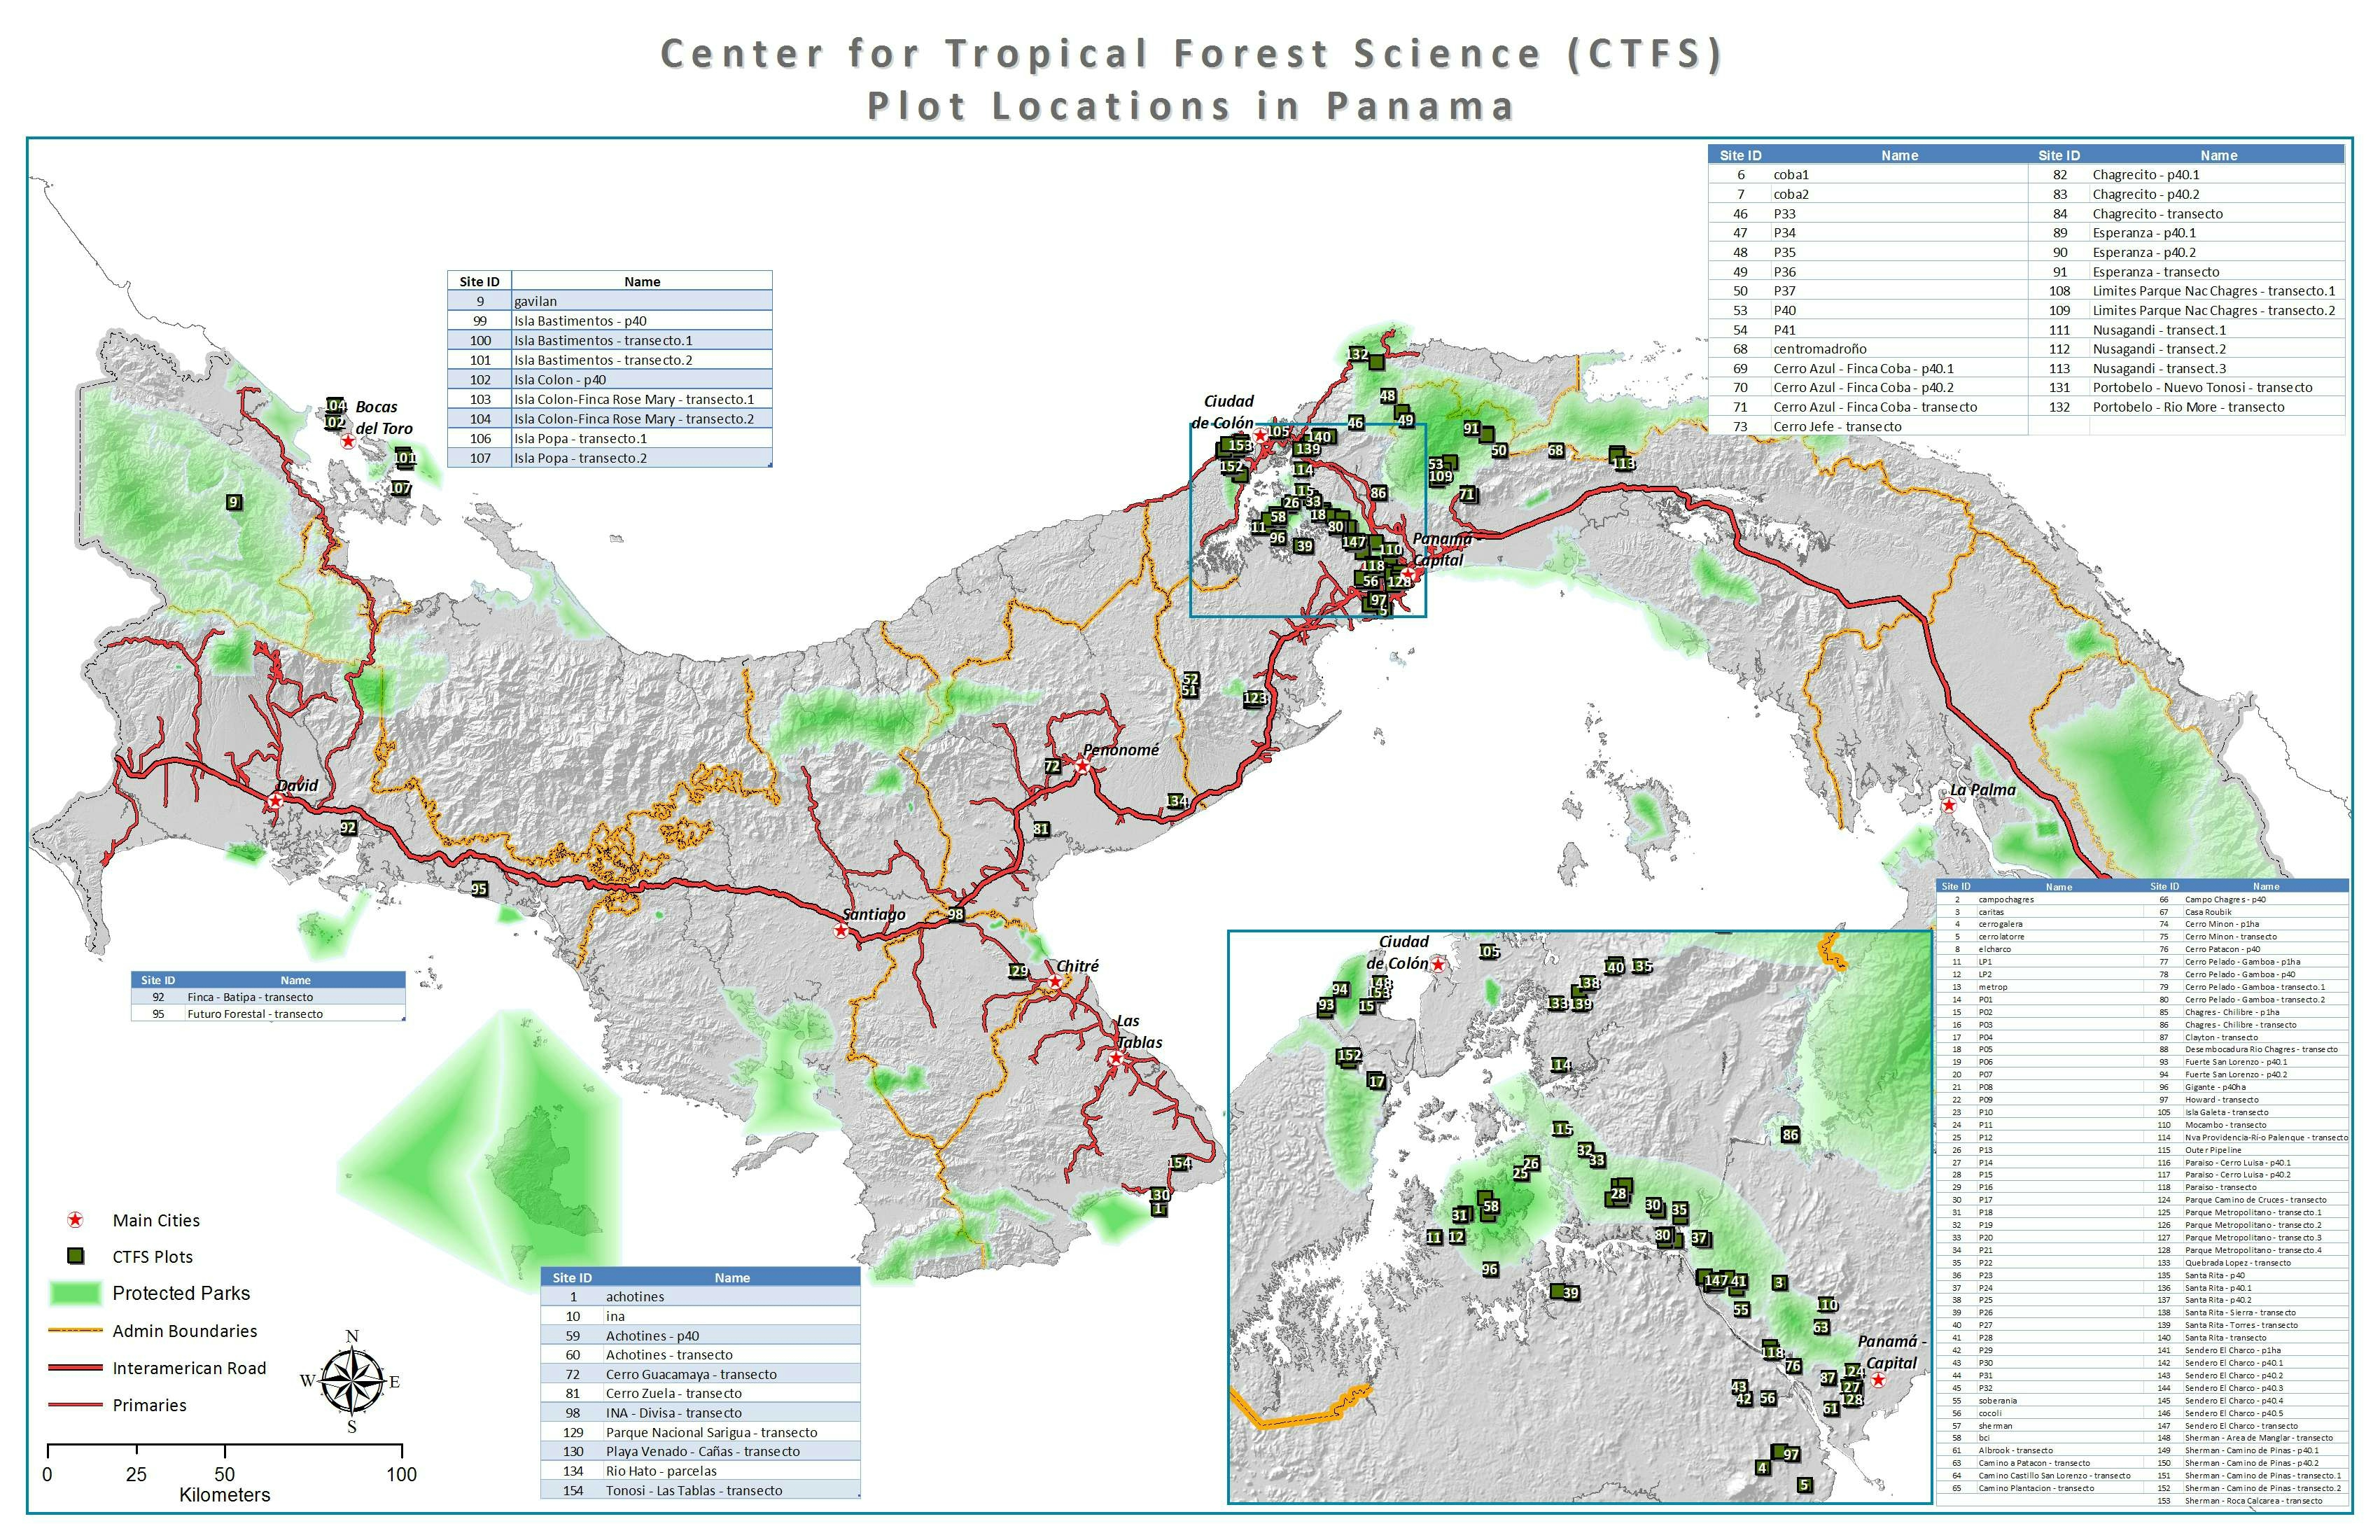 CTFS Plot Locations in Panama